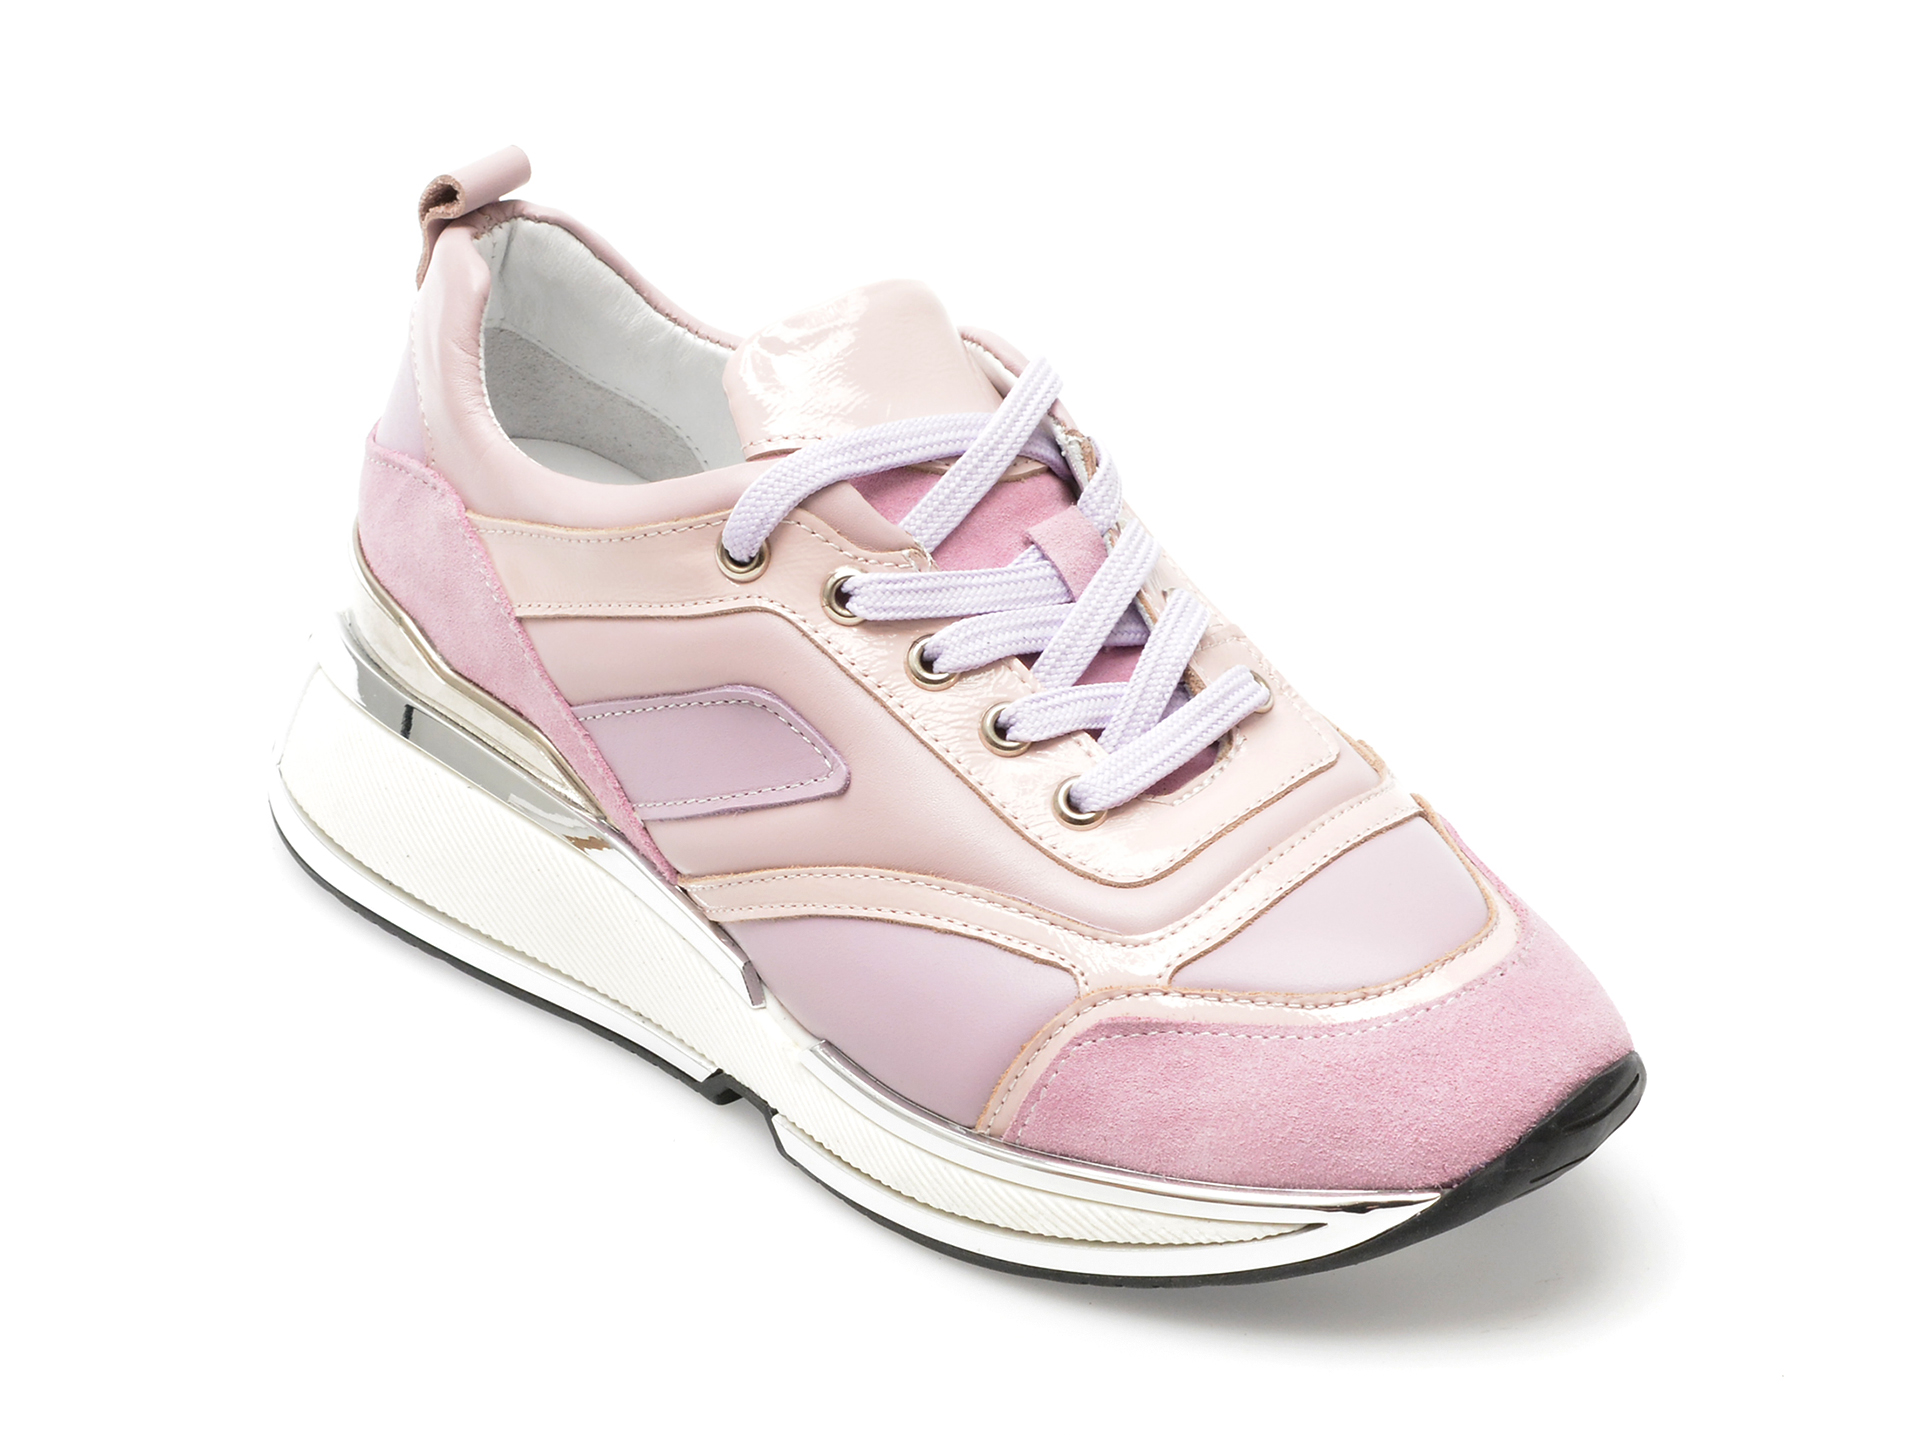 Pantofi DONNA CRIS roz, 1355320, din piele naturala